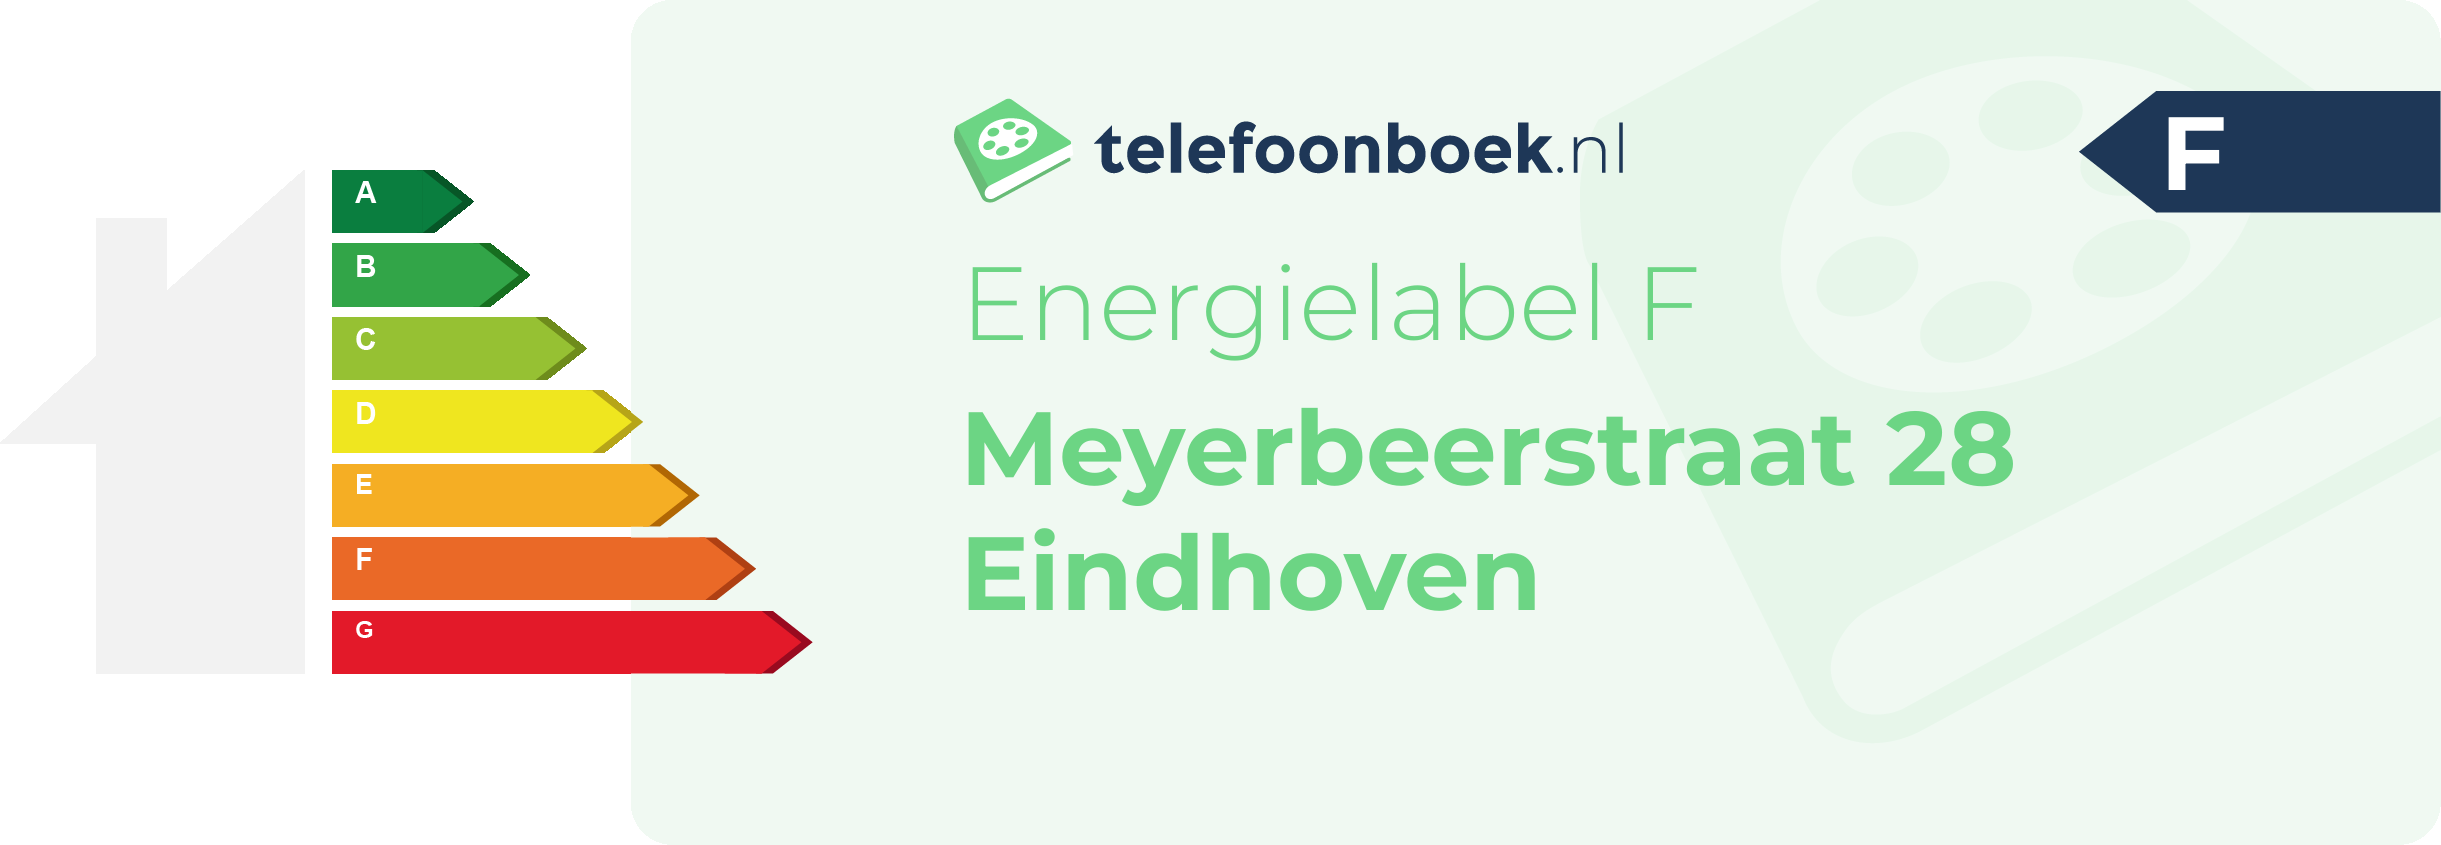 Energielabel Meyerbeerstraat 28 Eindhoven